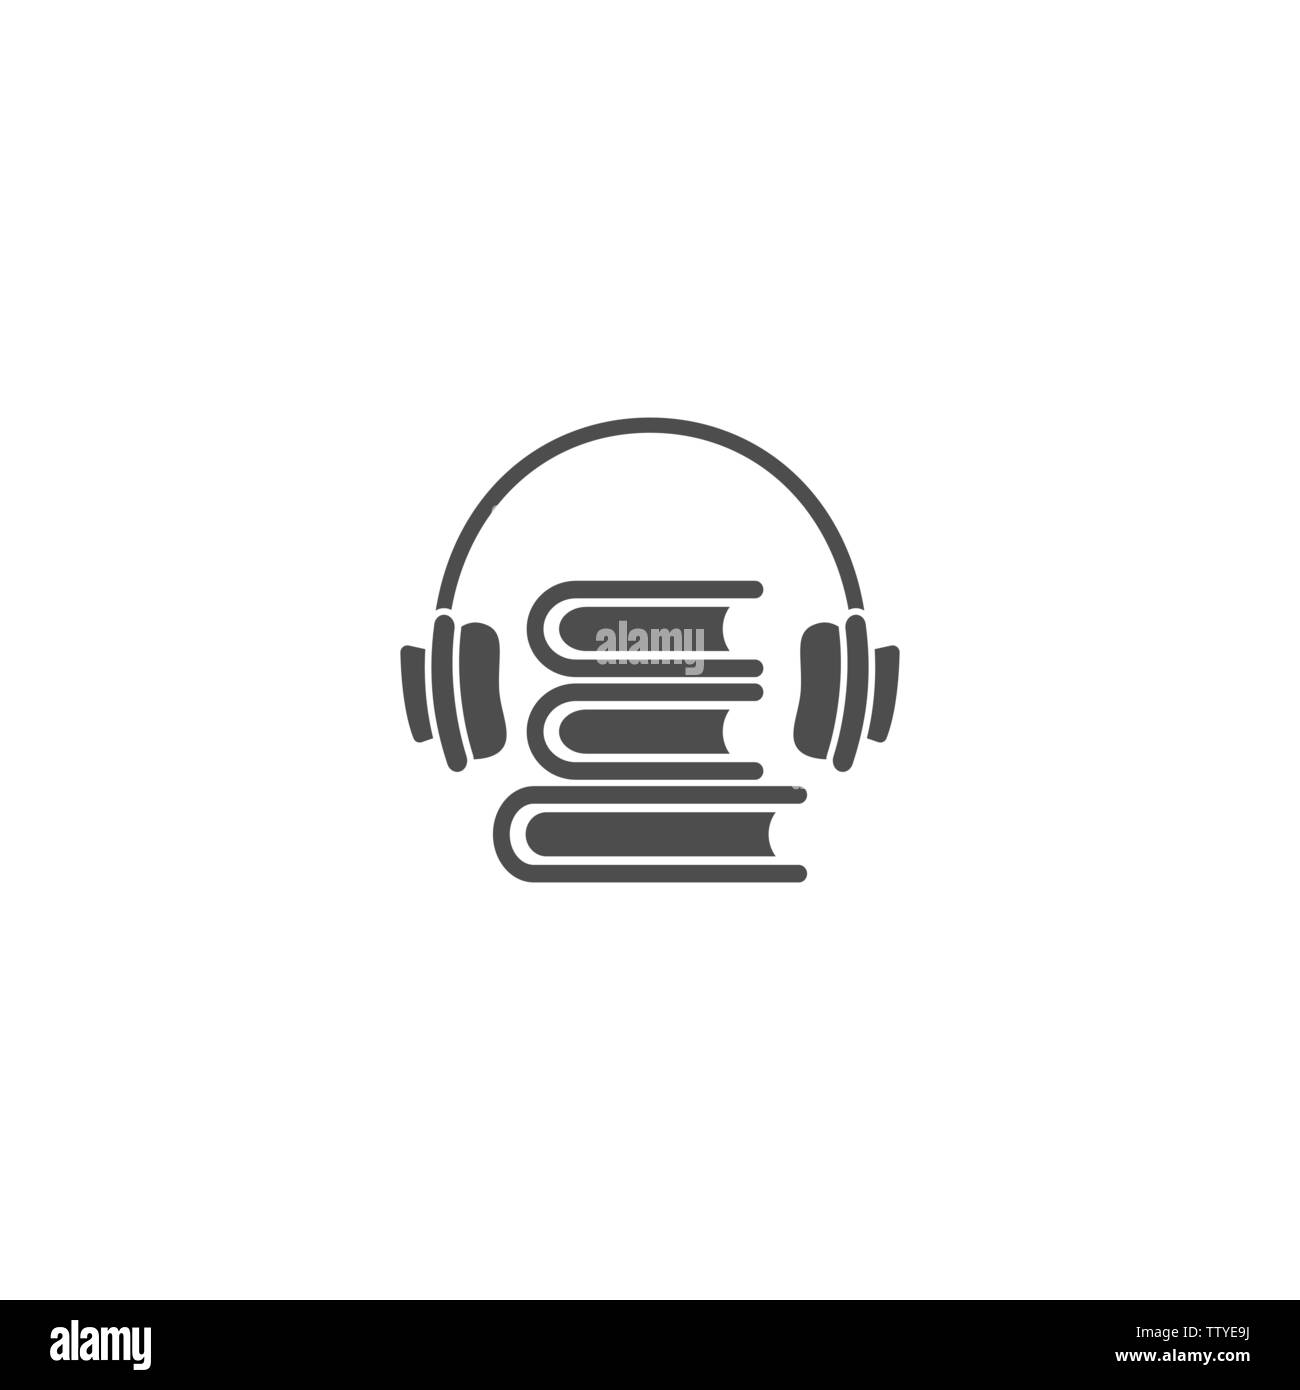 Pila de libros negros con audífonos o auriculares aislado sobre fondo  blanco. Flat ilustración vectorial. Logotipo online de educación en  Internet. Estudiar, Aprender o Imagen Vector de stock - Alamy